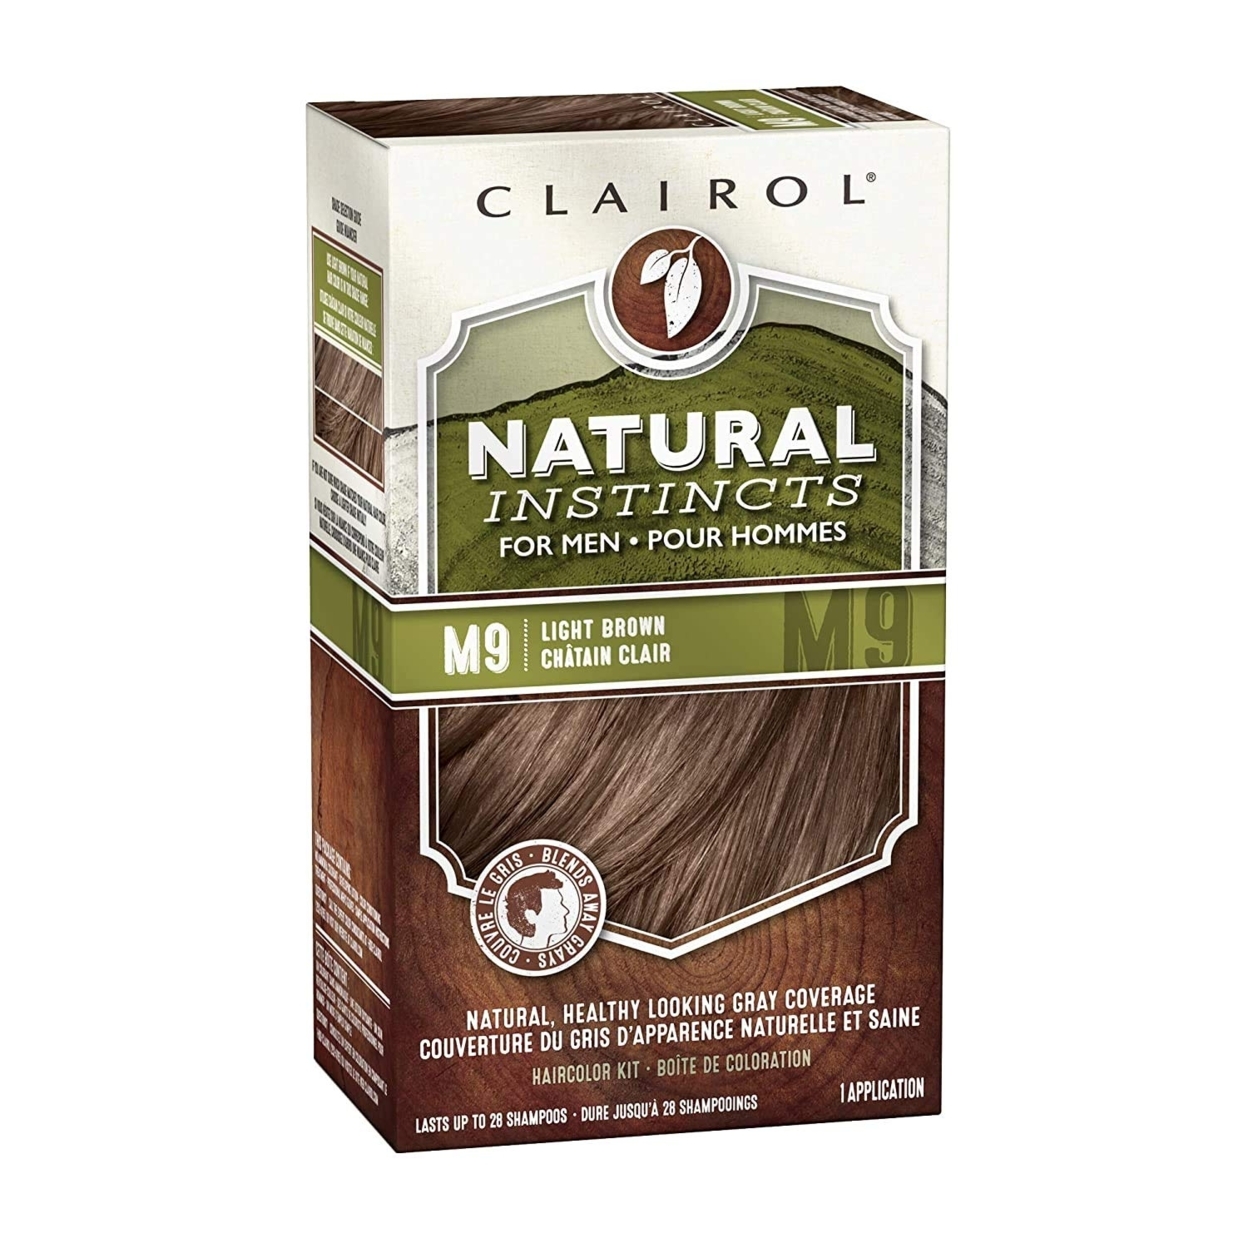 Clairol Natural Instincts Semi-Permanent Hair Dye Kit For Men, Light Brown